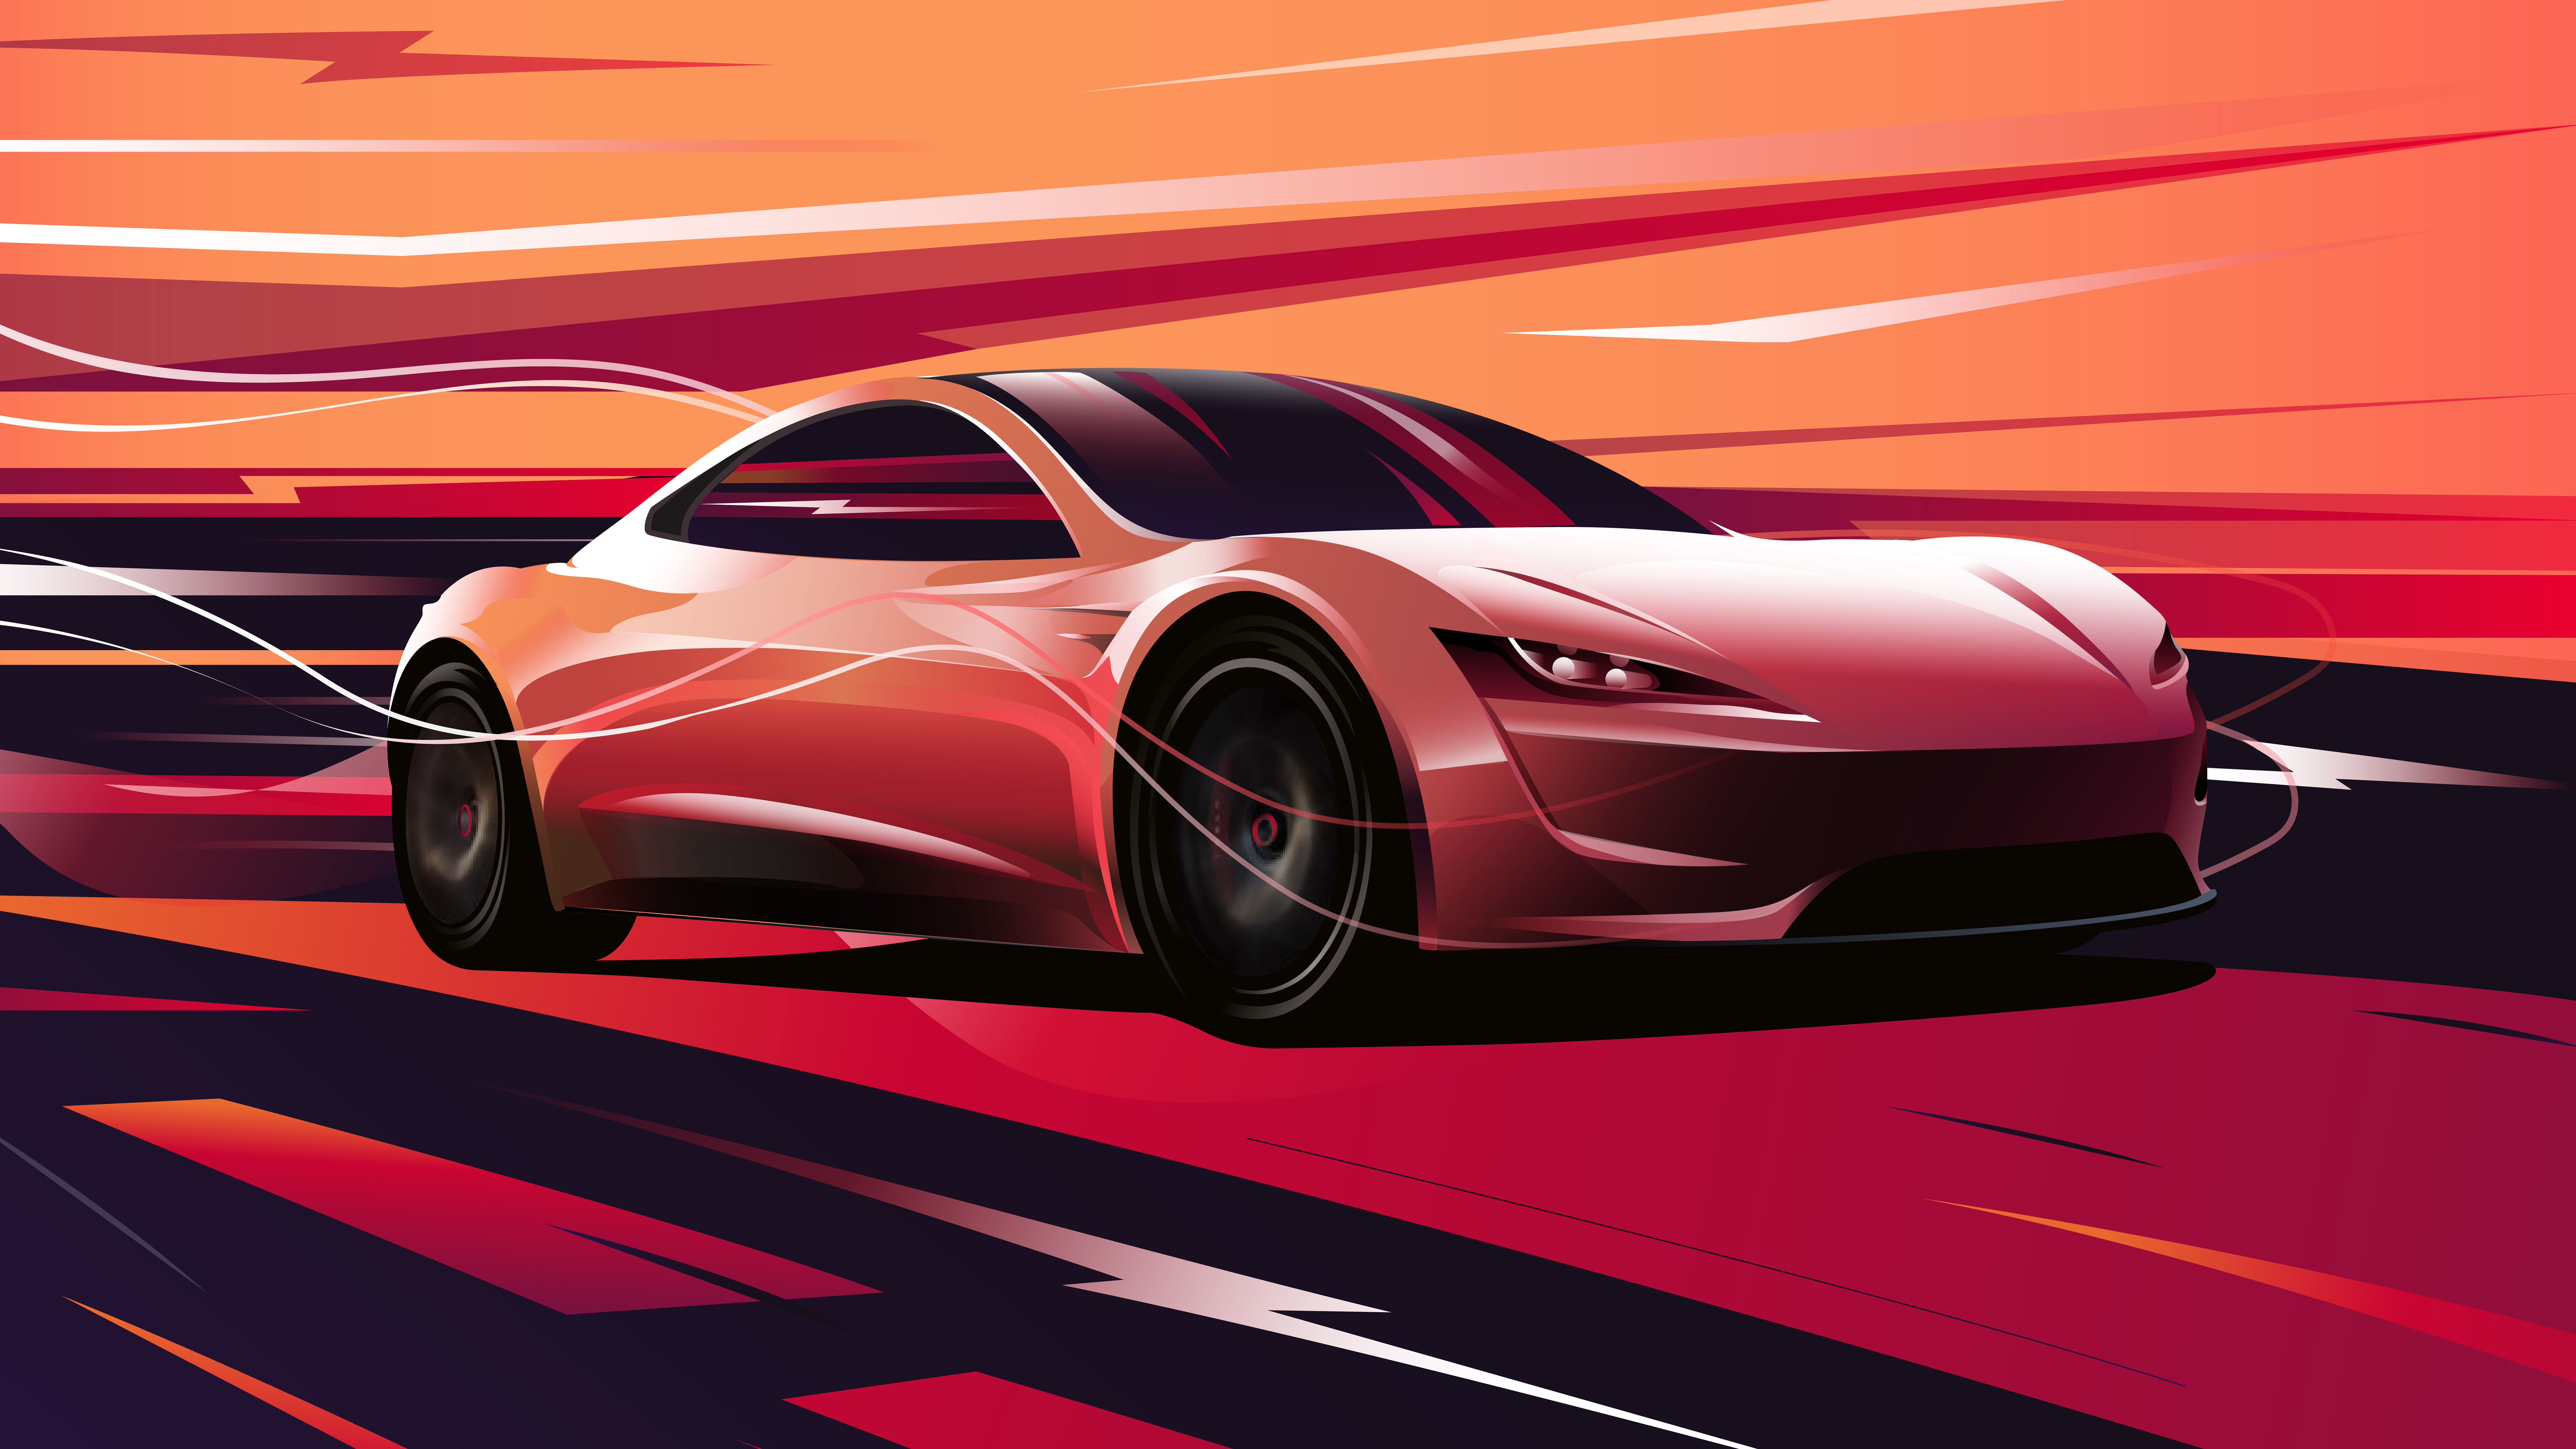  download Tesla Roadster 2020 4K 8K Wallpapers HD Wallpapers 7680x4320